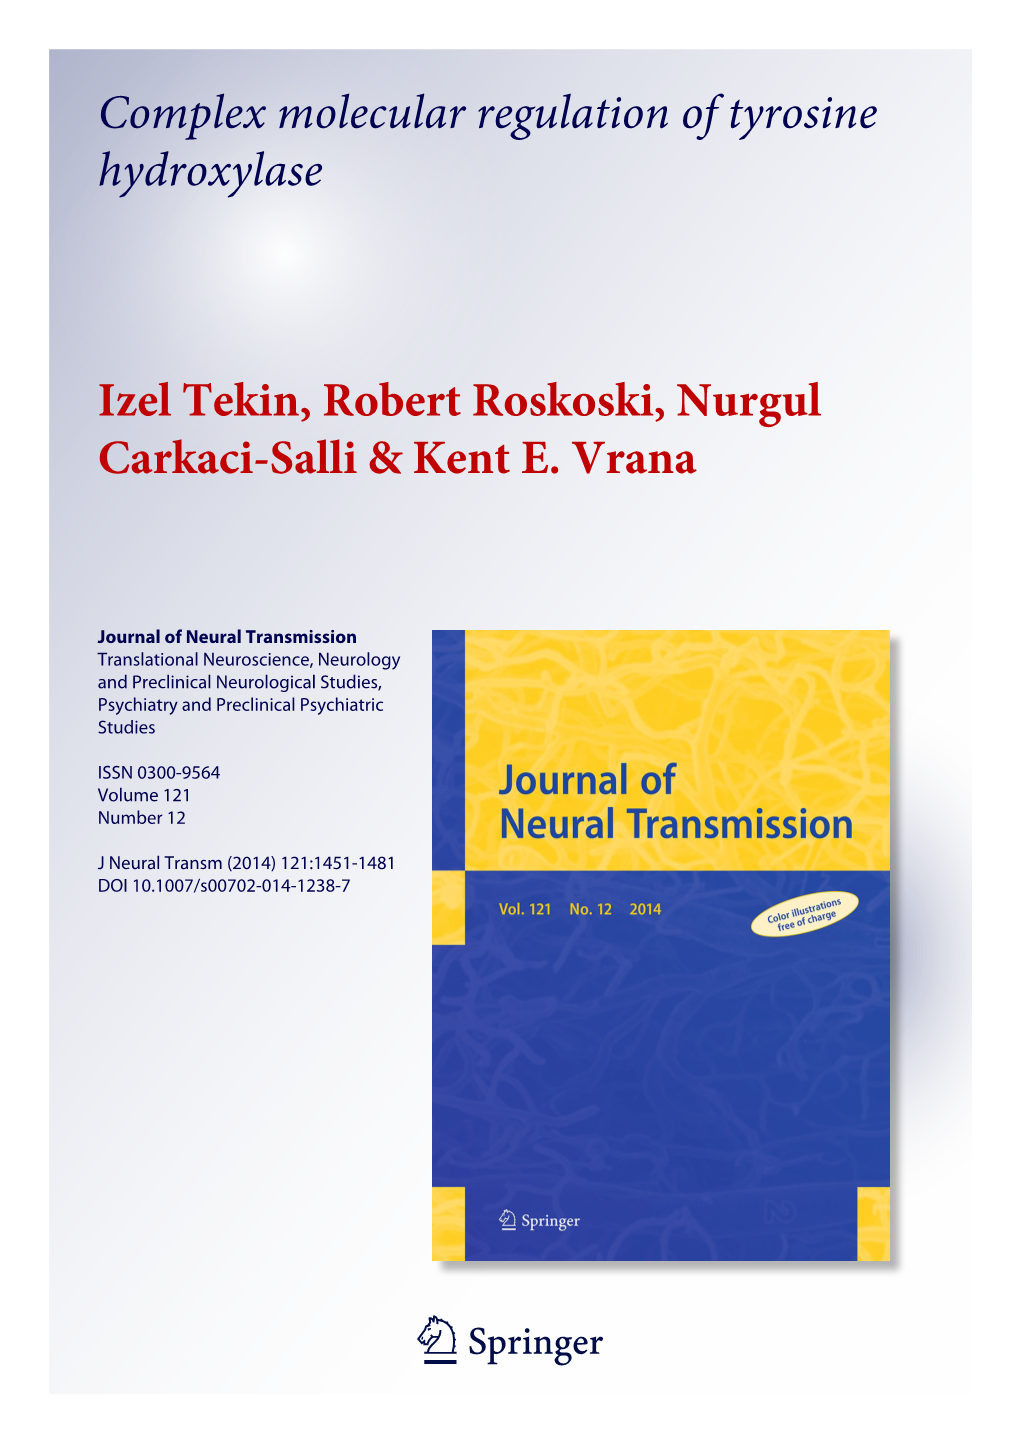 Complex Molecular Regulation of Tyrosine Hydroxylase Izel Tekin, Robert Roskoski, Nurgul Carkaci-Salli & Kent E. Vrana